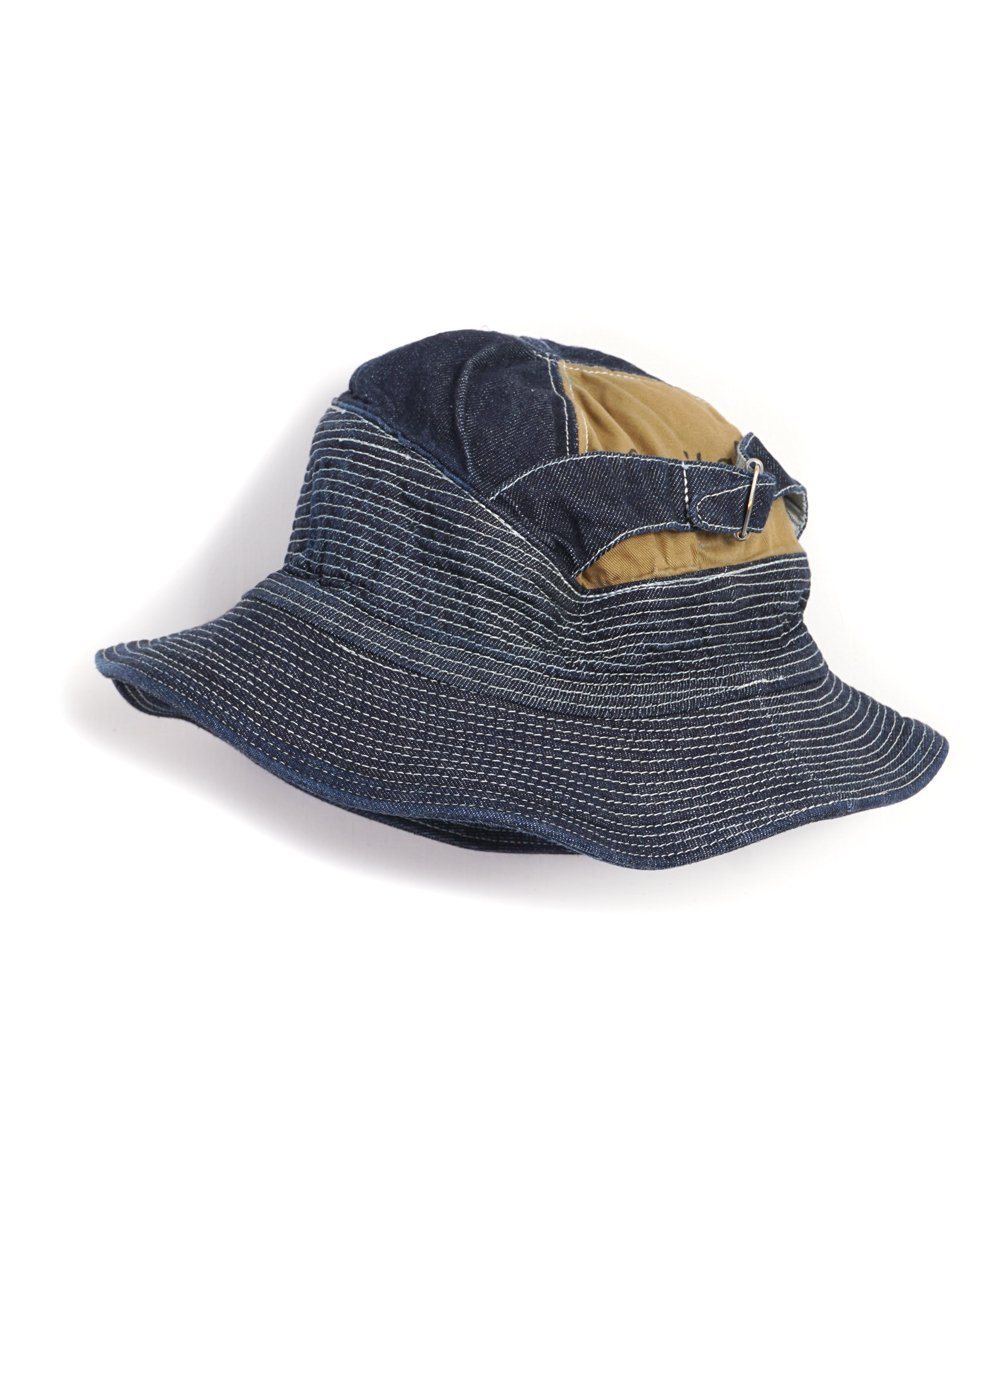 Kapital - THE OLD MAN AND THE SEA | Denim Hat | Dark - HANSEN Garments